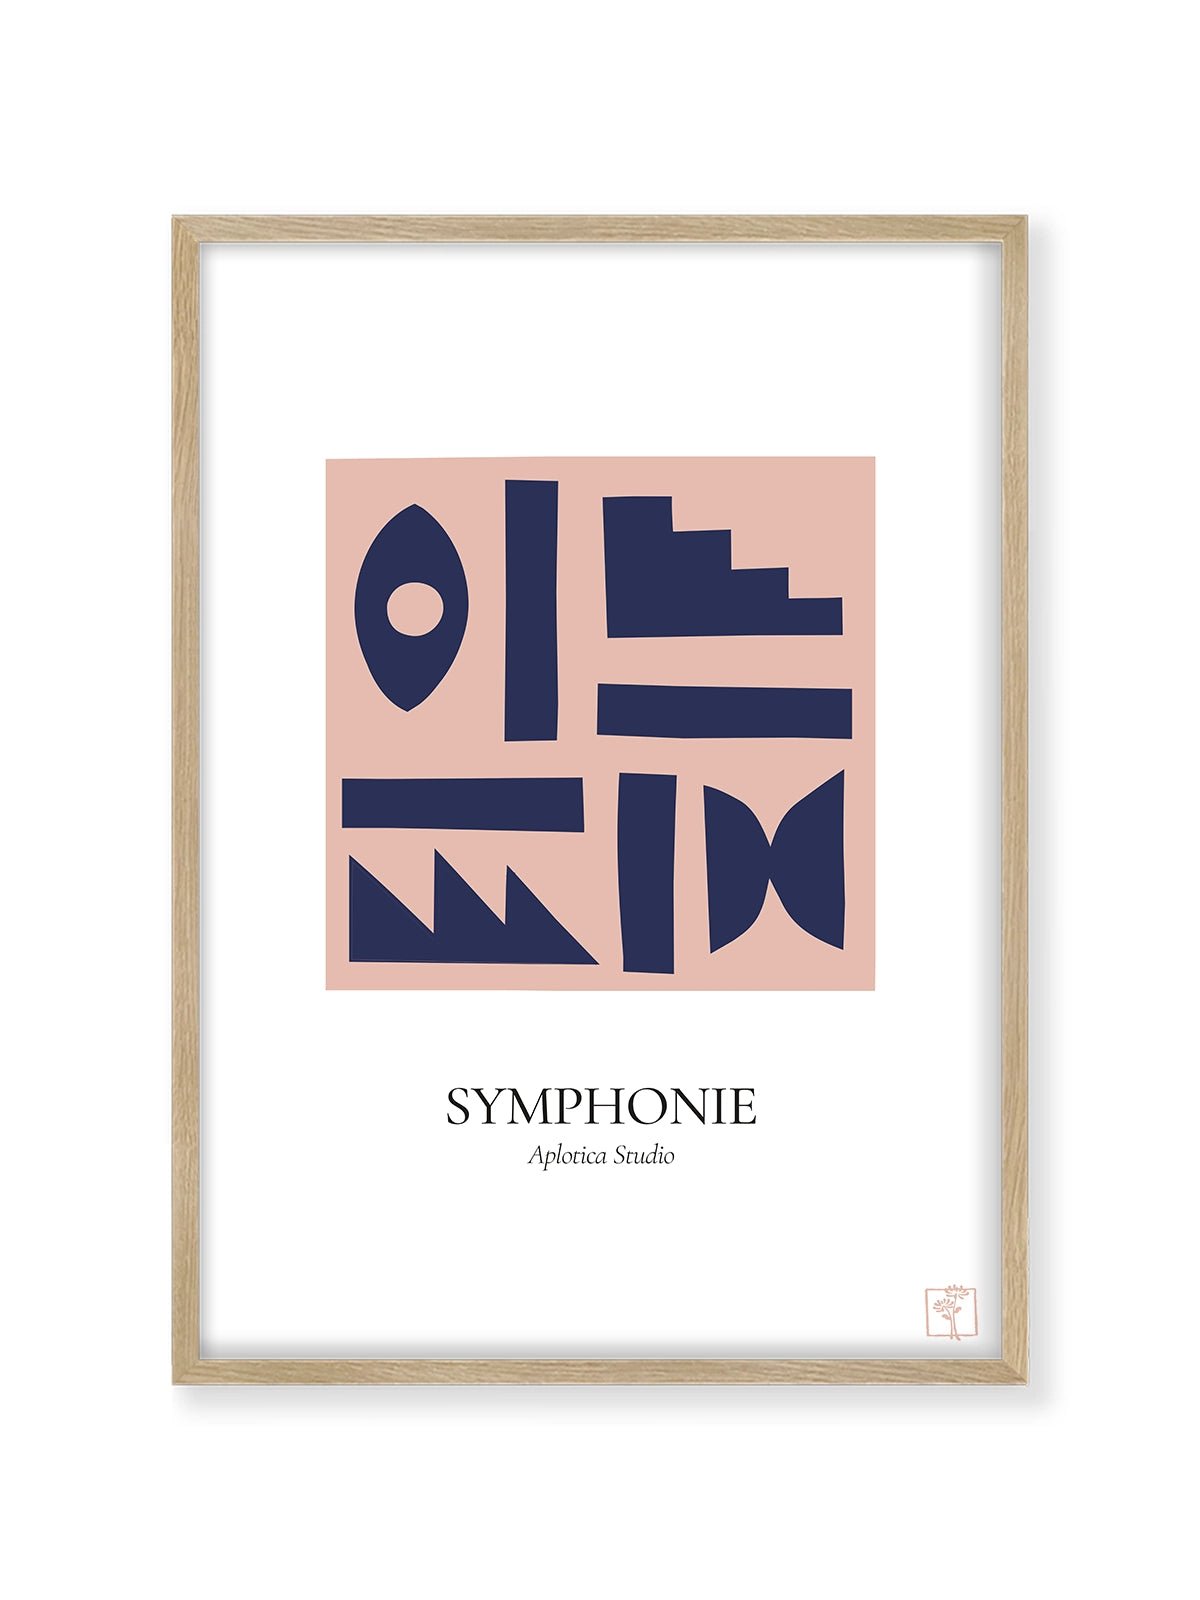 Symphonie - Una Lámina de Aplotica Studio - Decora tu casa en Nomadart